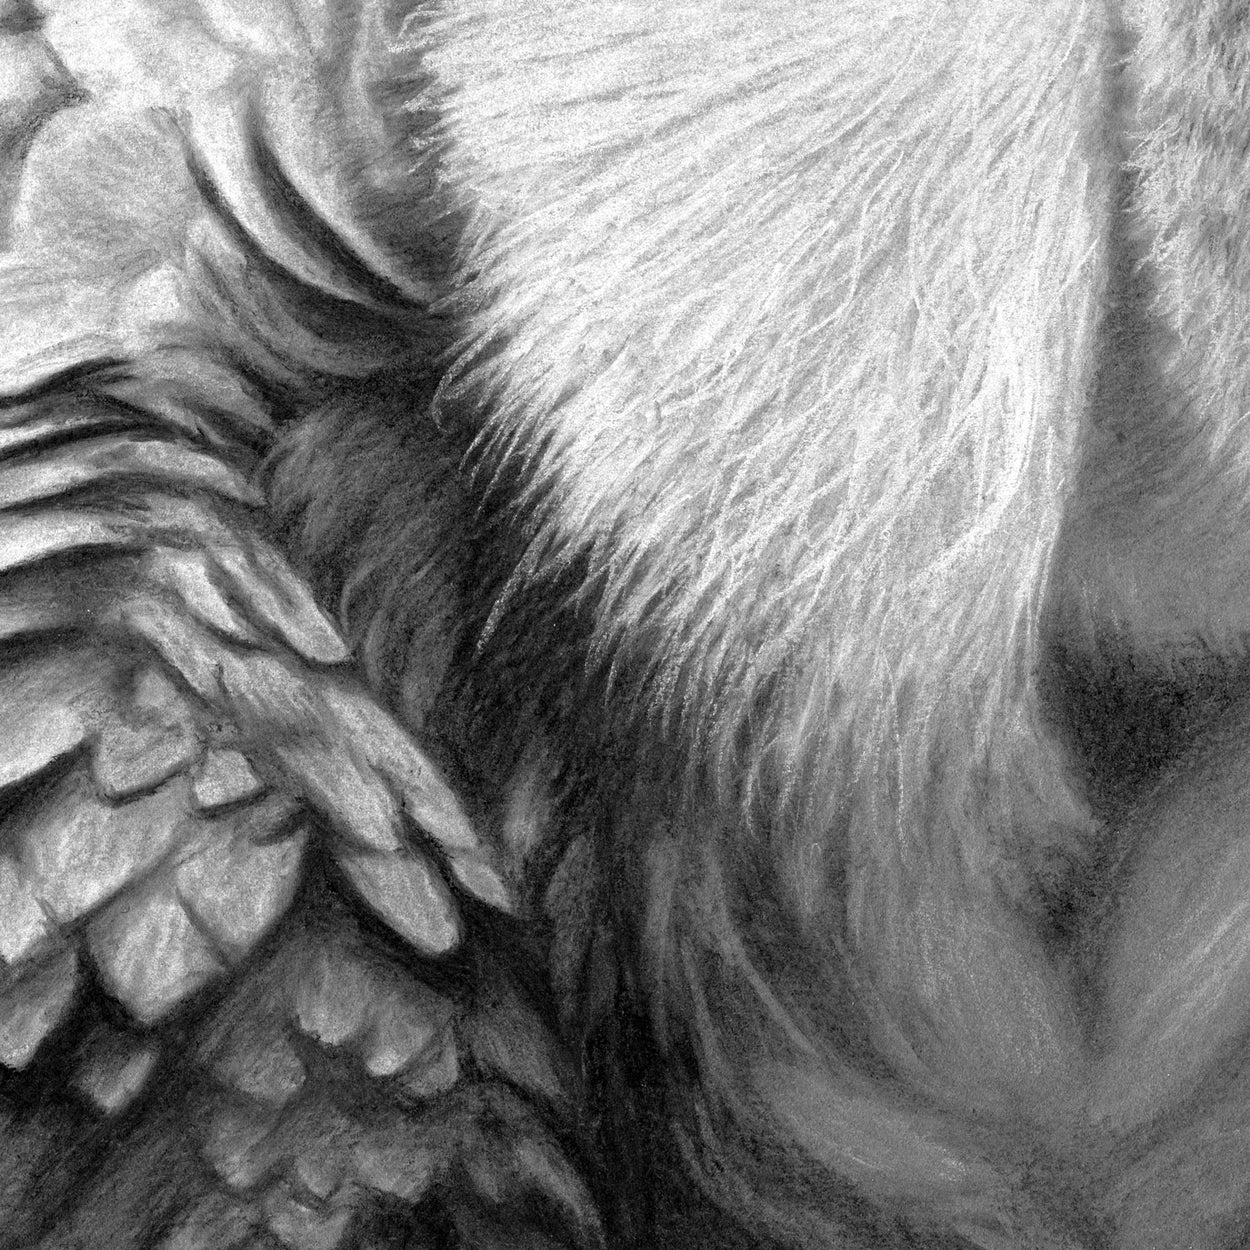 Griffon Vulture Feathers Close-up 2 - Jill Dimond